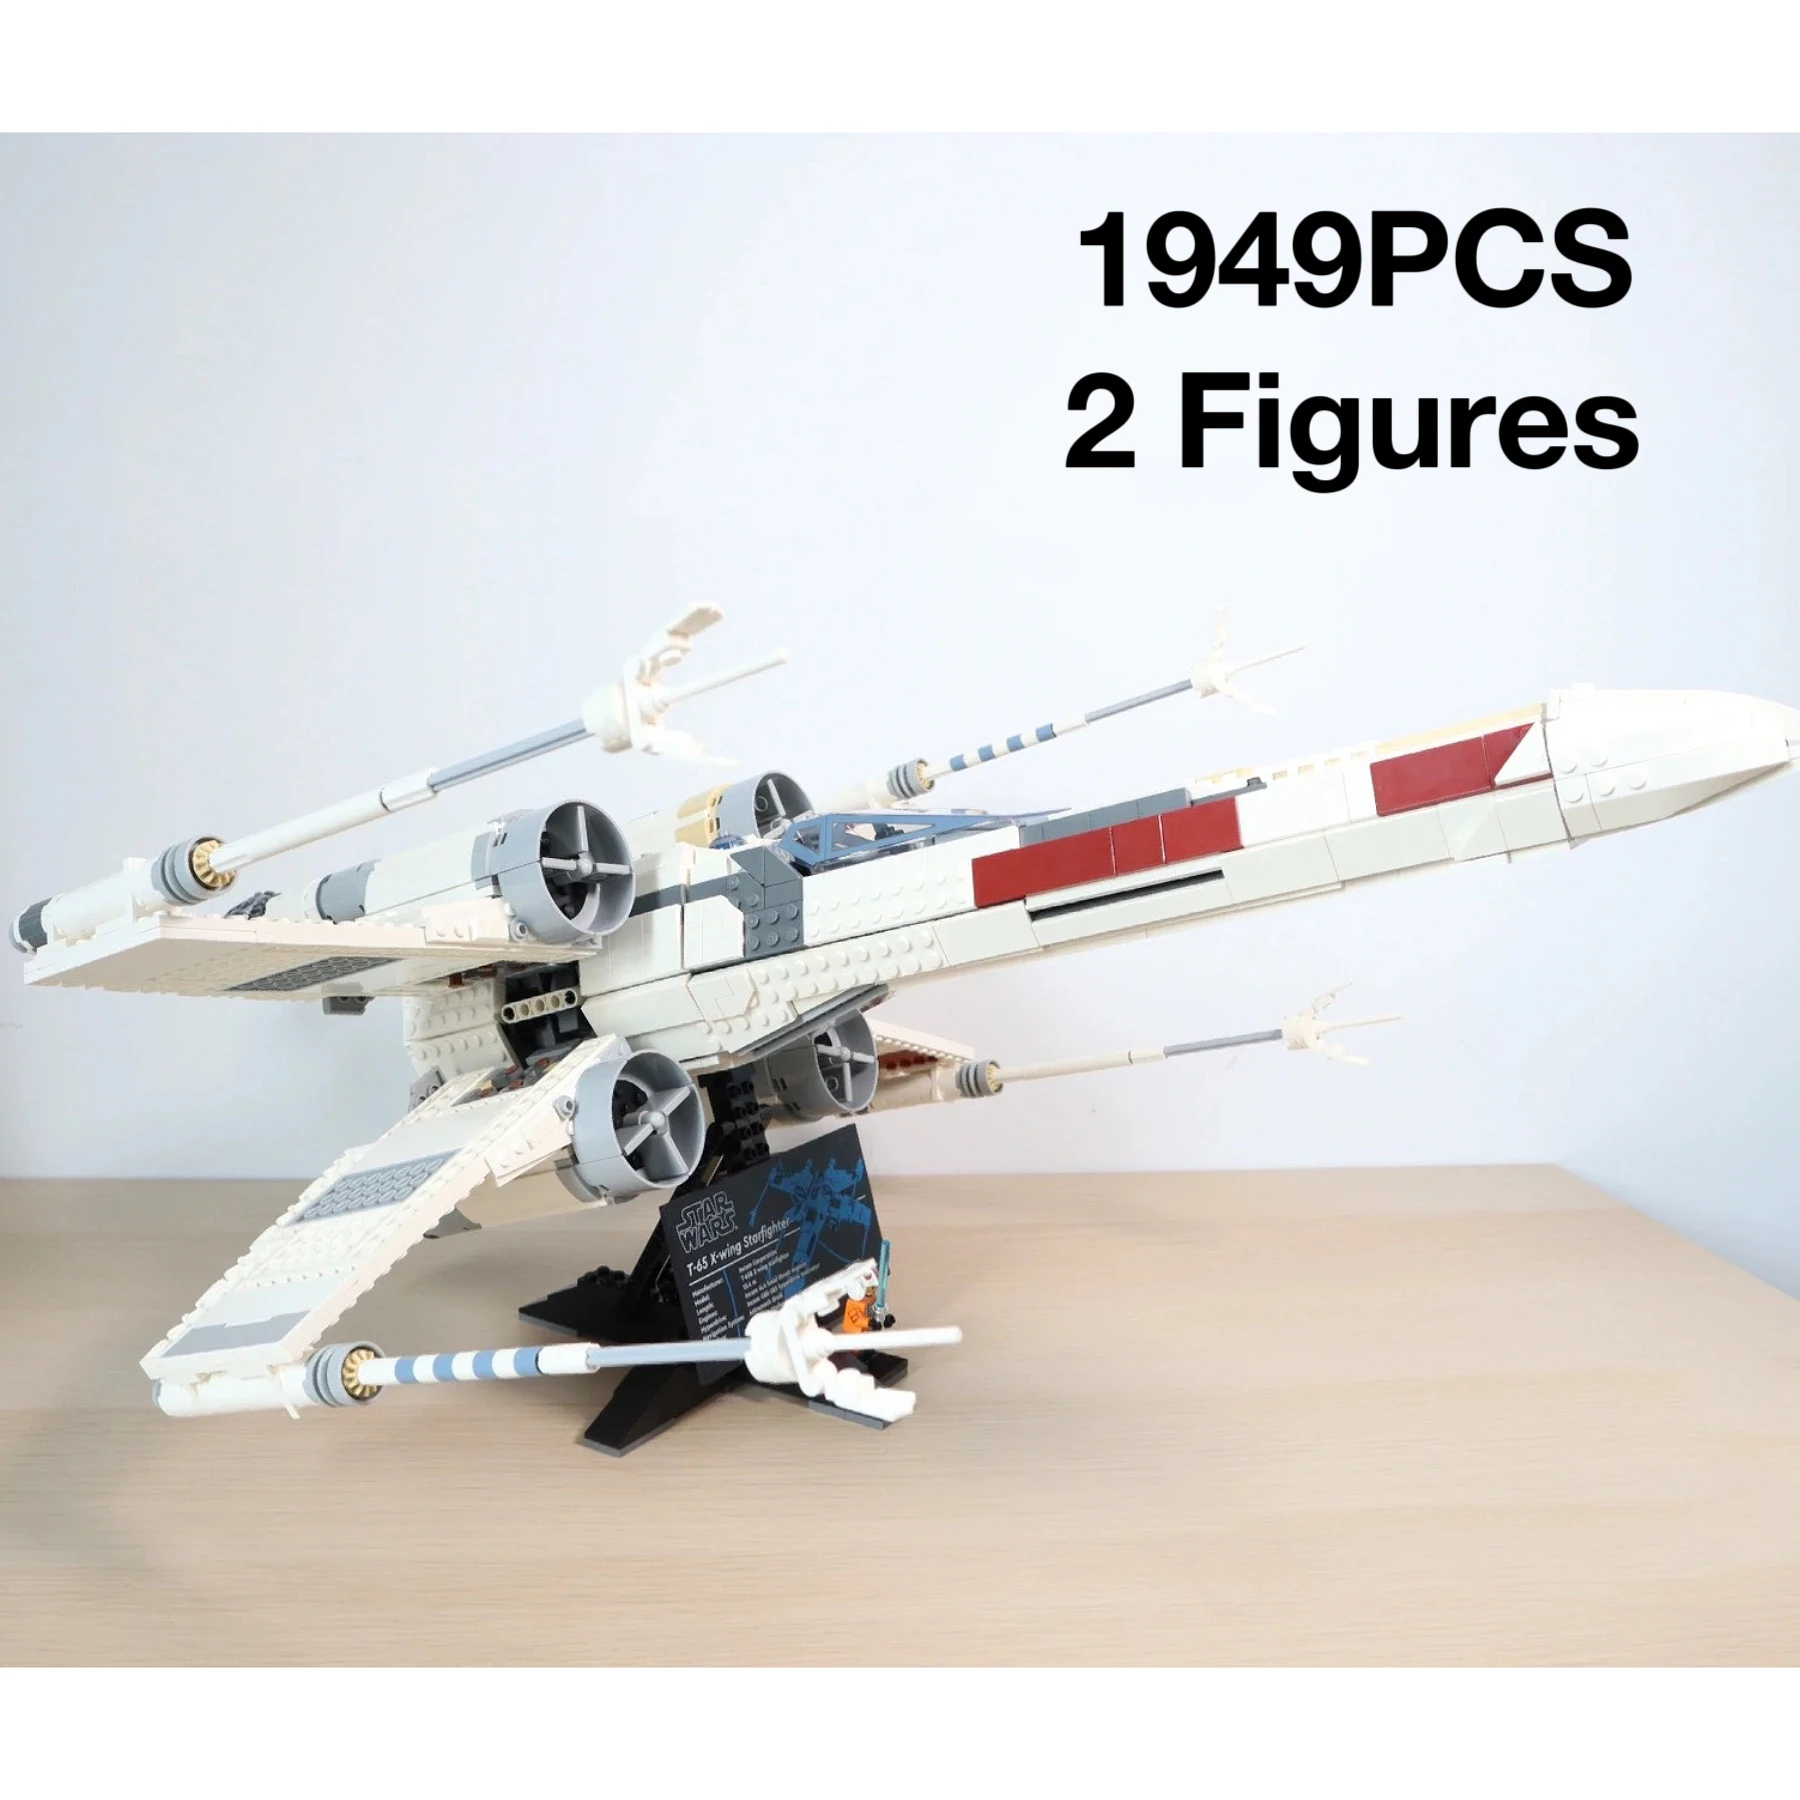 

NEW 75355 X Wing Fighter Kit bangunan klasik mainan konstruksi pesawat ruang angkasa Planefighter blok bata mainan untuk anak-a